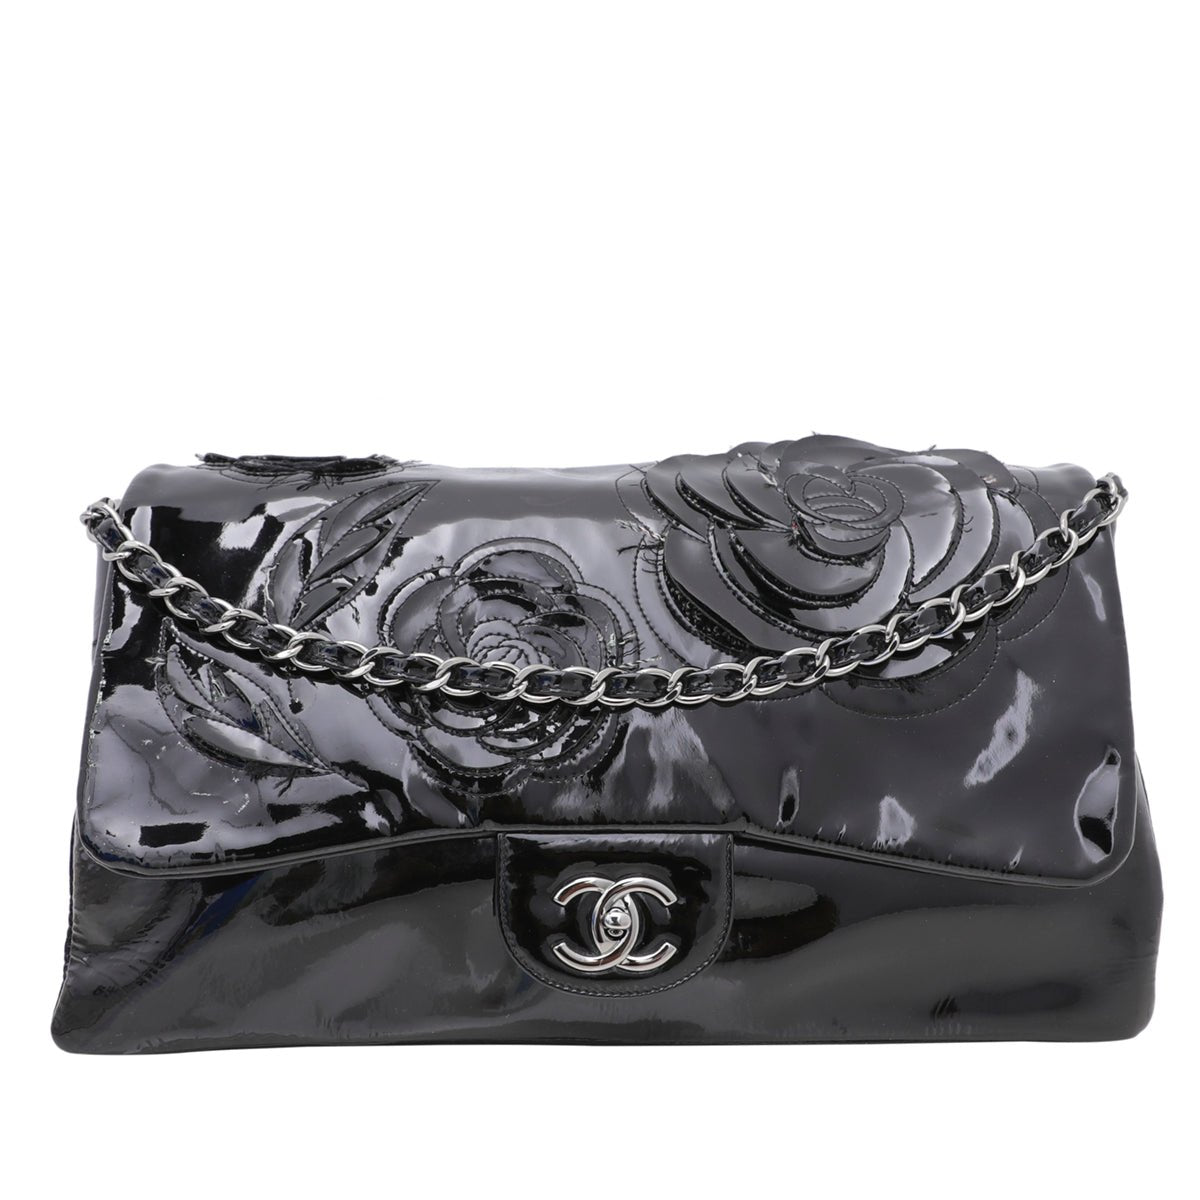 The Closet - Chanel Black CC Accordion Camellia Flap Bag | The Closet